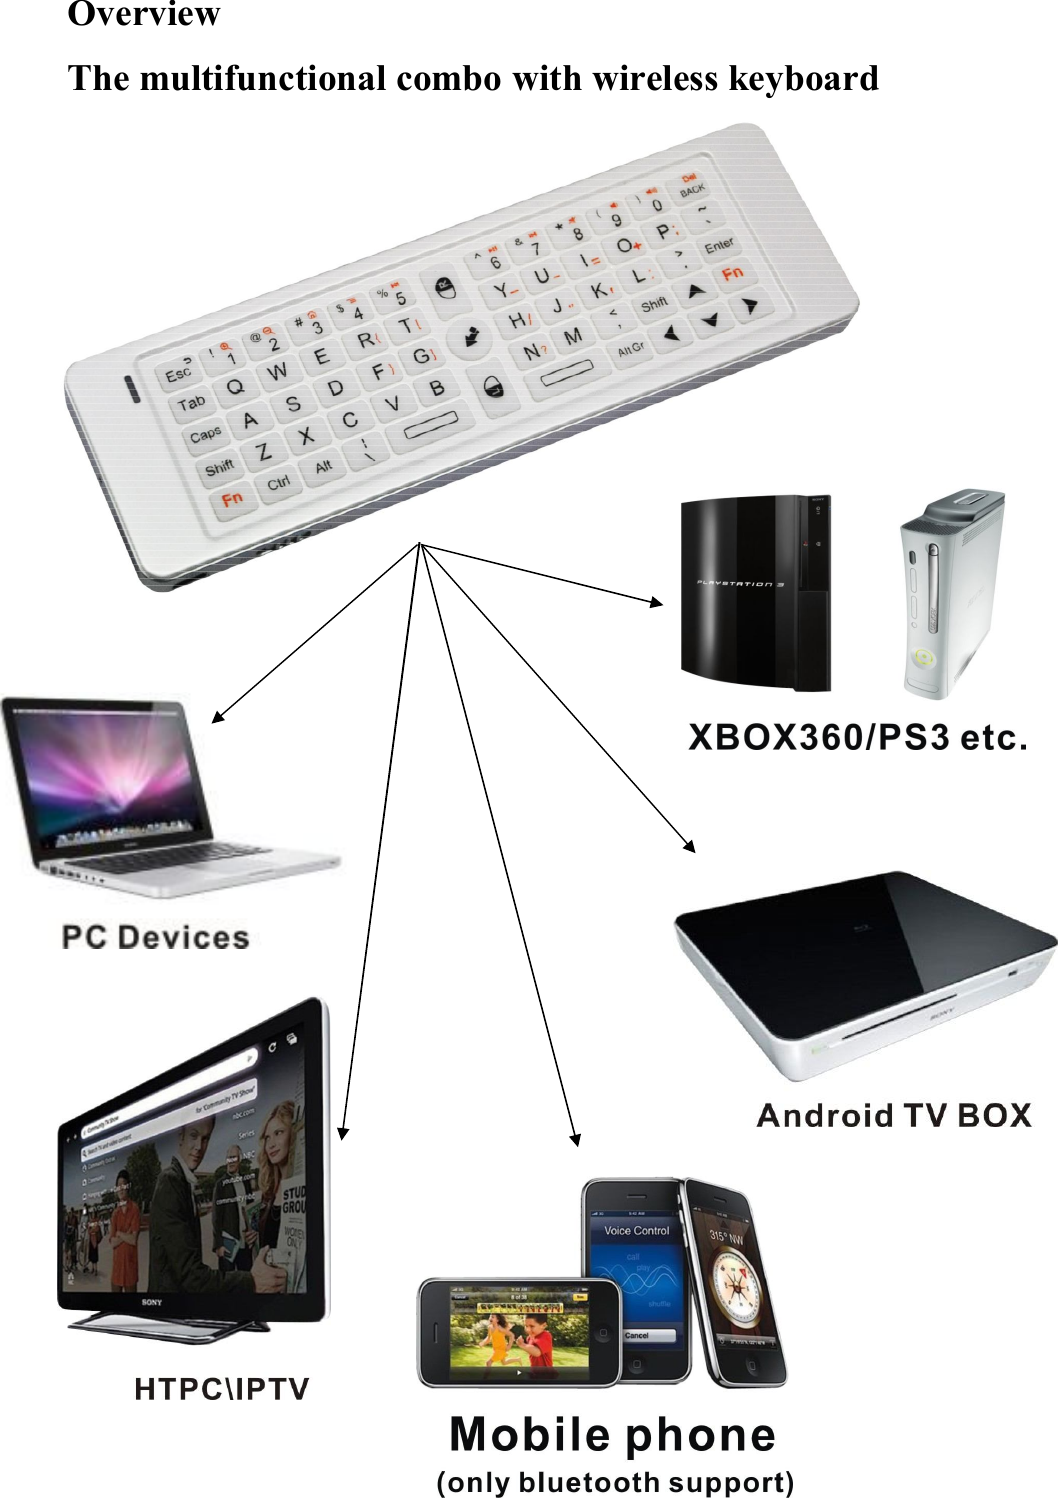 OverviewThe multifunctional combo with wireless keyboard